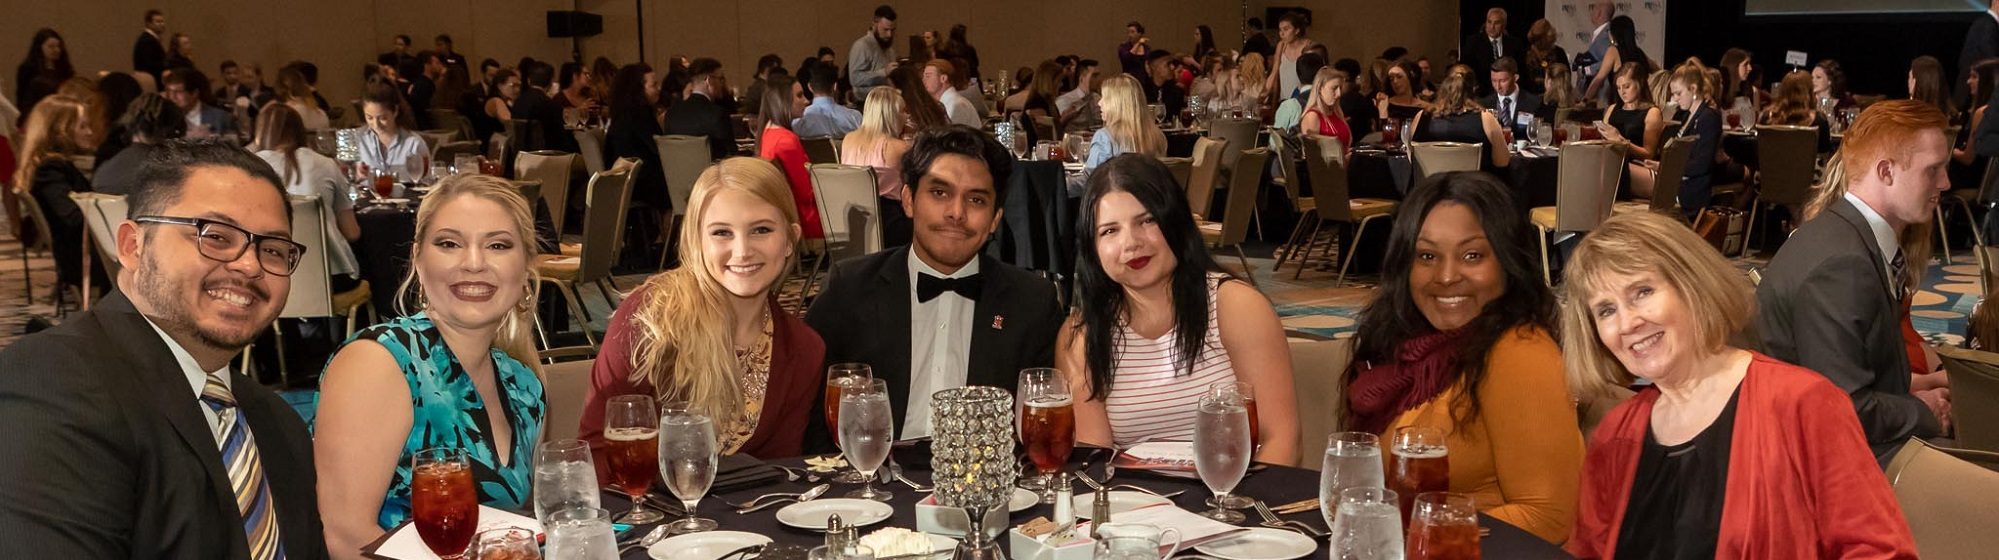 PRSSA members at a formal awards dinner